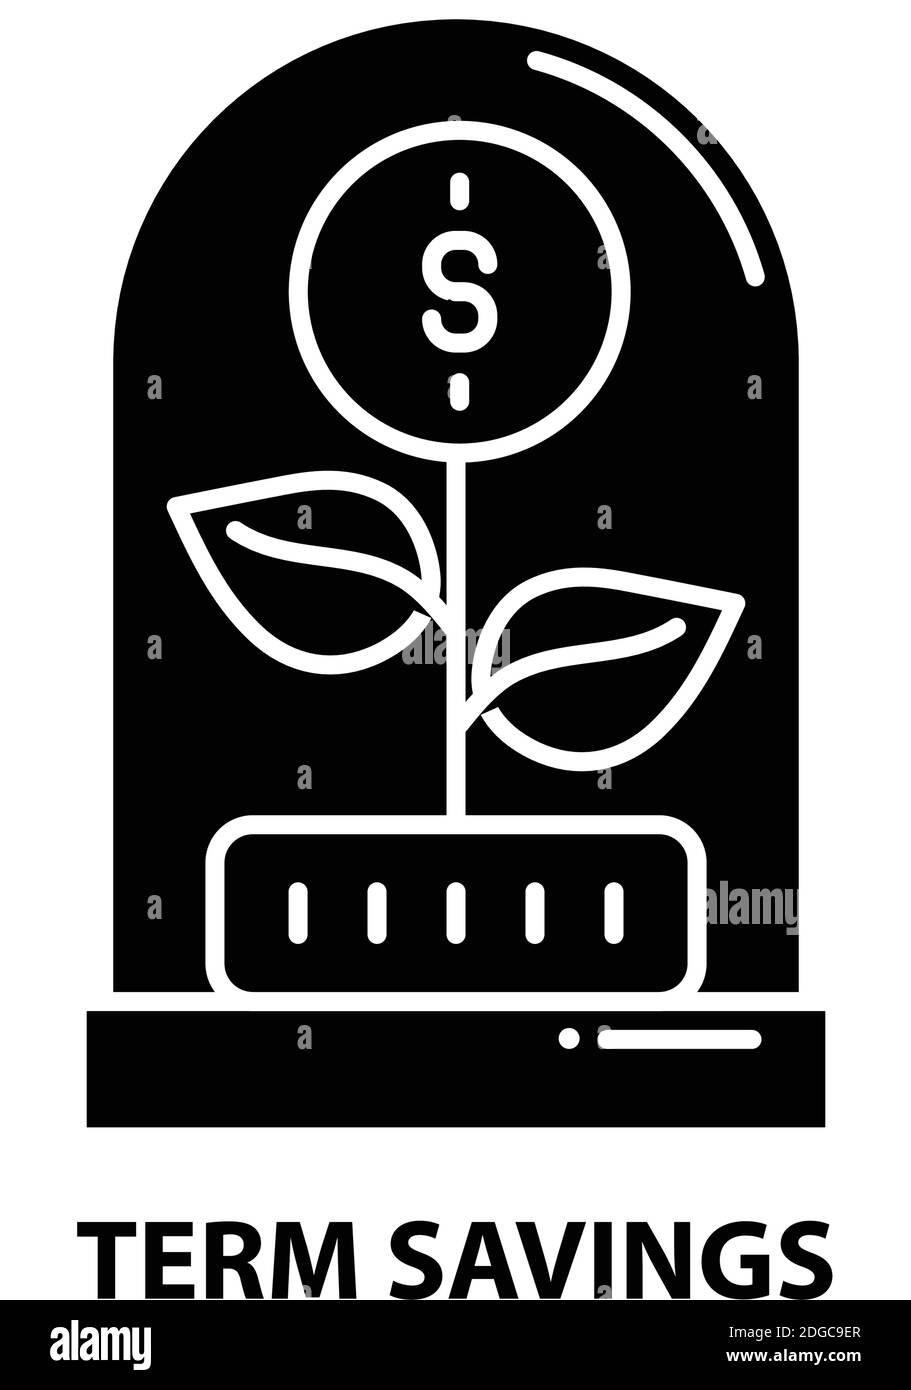 term savings icon, black vector sign with editable strokes, concept illustration Stock Vector